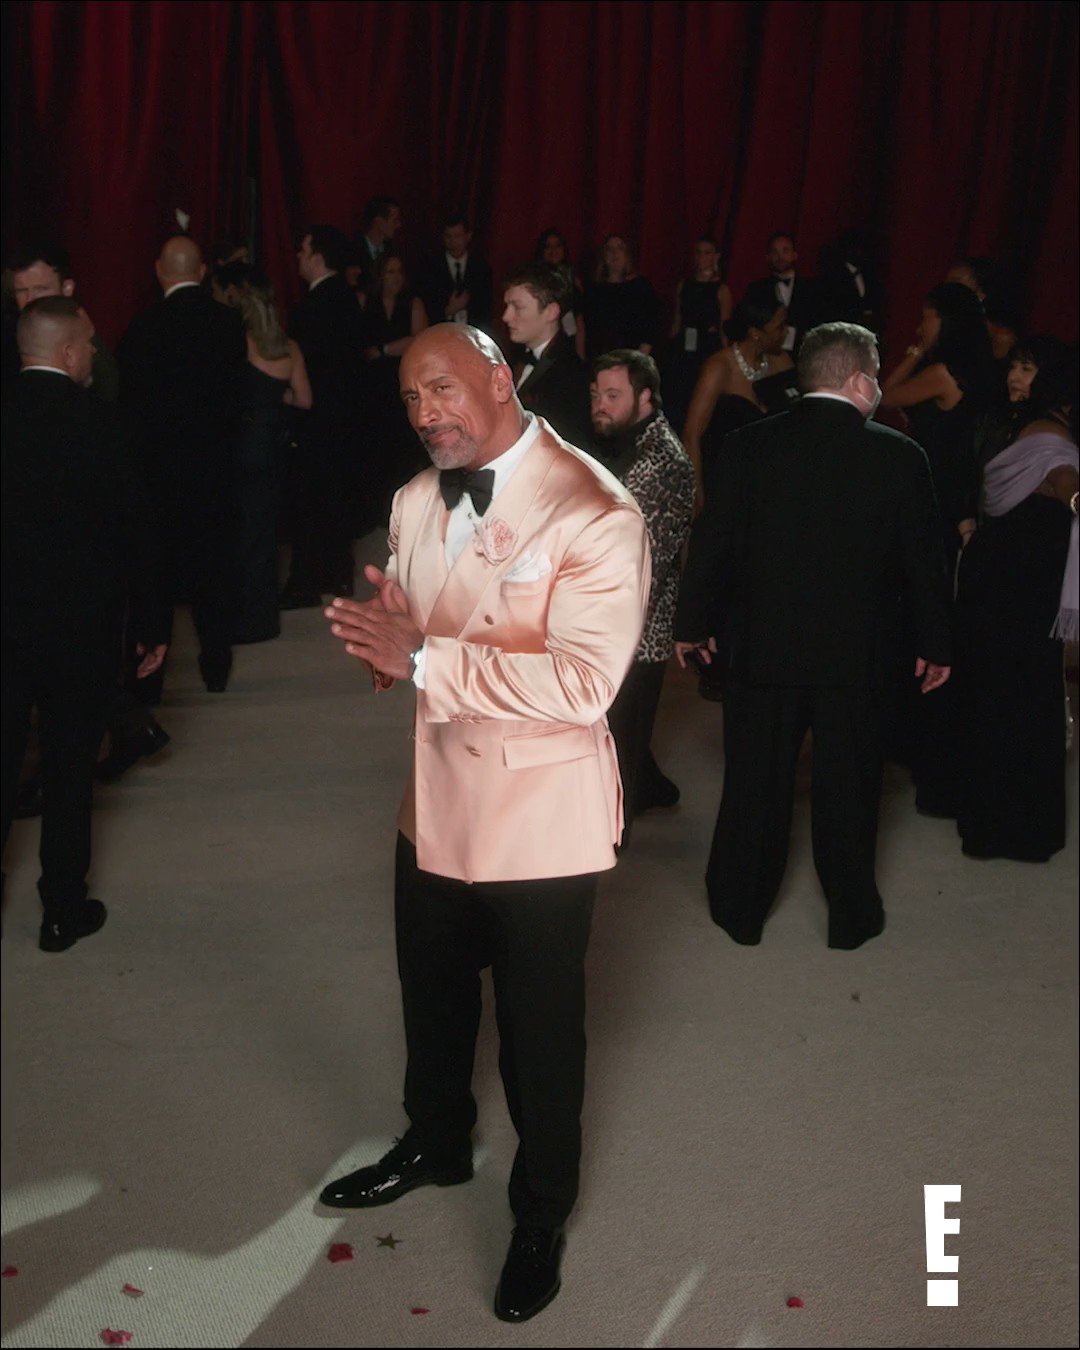 Dwayne Johnson Rocks Bright Red Suit to 'Black Adam' Premiere in NYC: Photo  4837645 | Aldis Hodge, Black Adam, Dwayne Johnson, Marwan Kenzari, Mo Amer,  Noah Centineo, Pierce Brosnan, Quintessa Swindell, Sarah